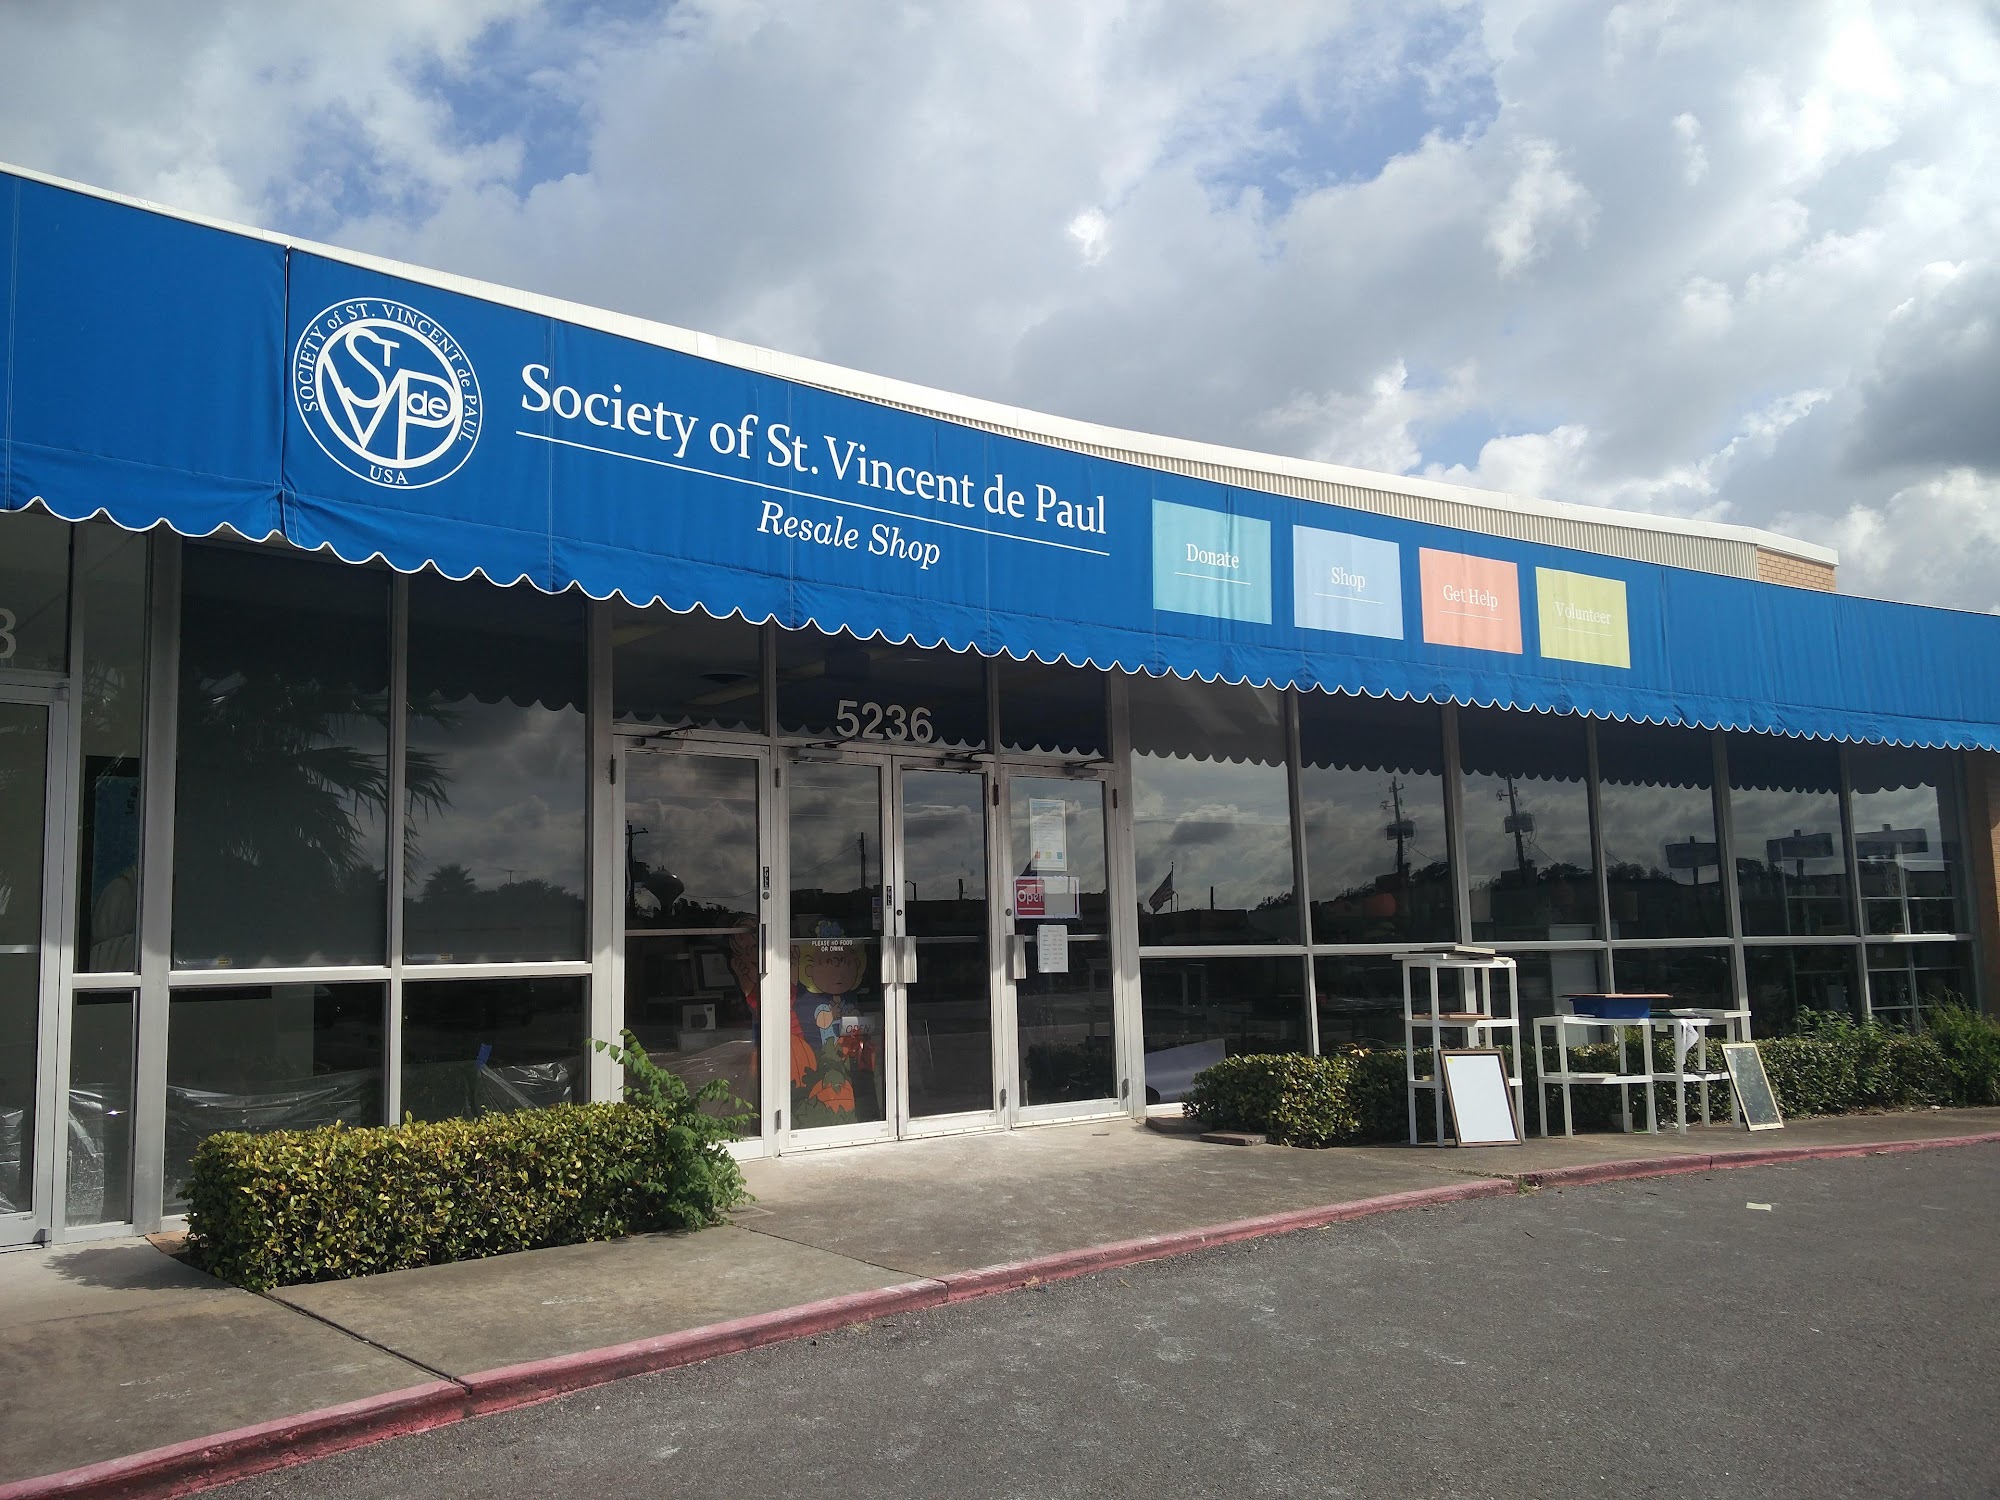 Society of St. Vincent de Paul Bellaire Thrift Store